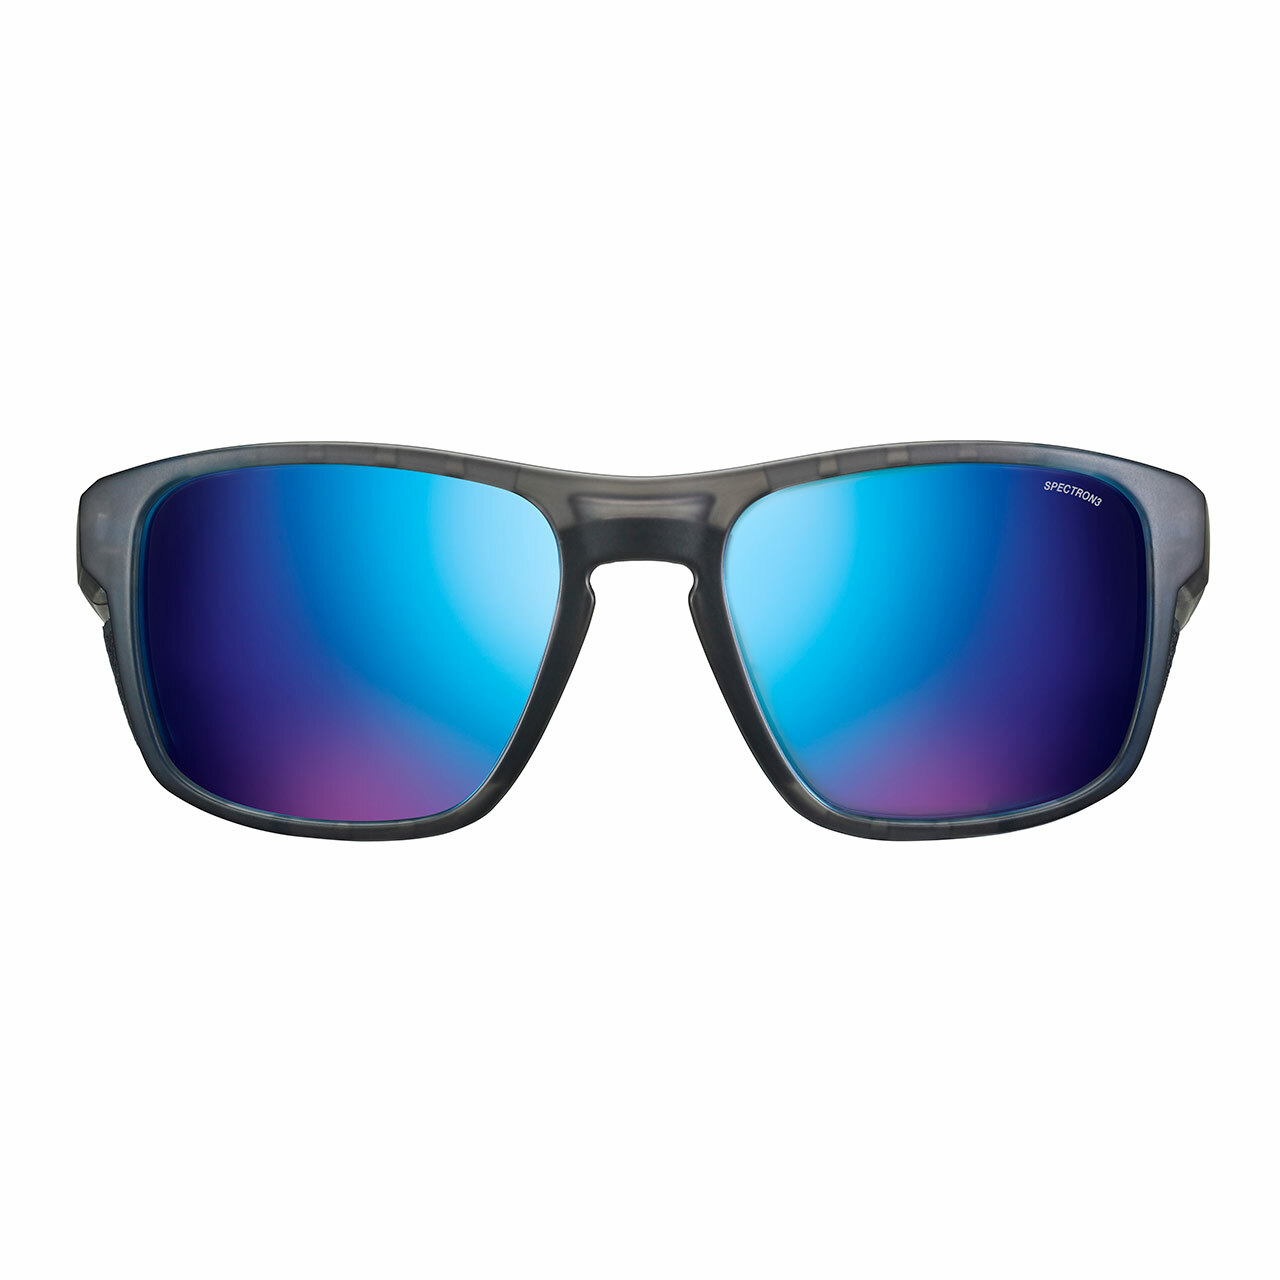 Uv Protection Shield Sunglasses For Men Women Styles Latest in Kiambu Road